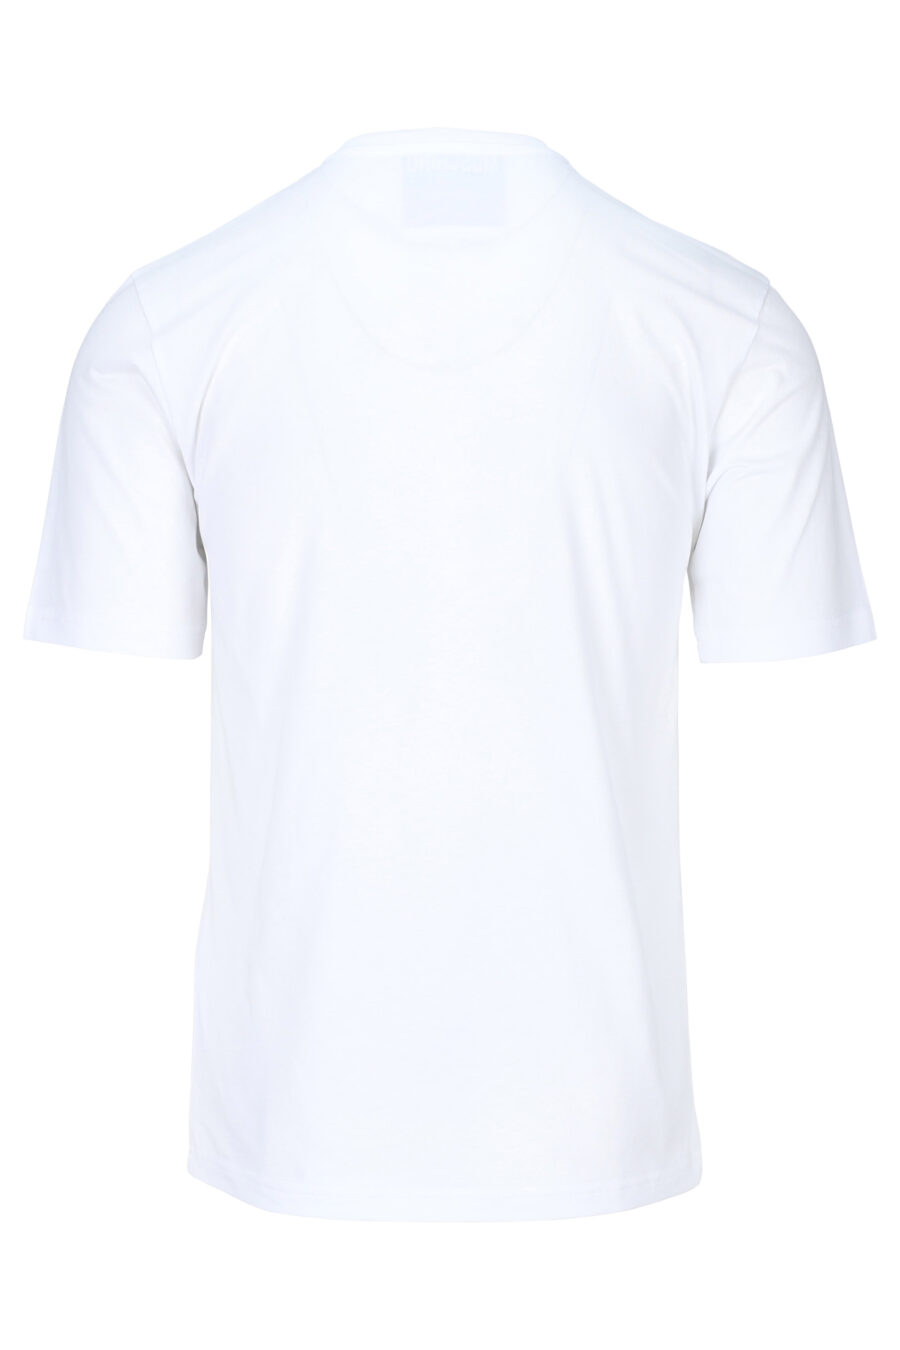 Camiseta blanca con maxilogo desgastado negro - 889316937954 1